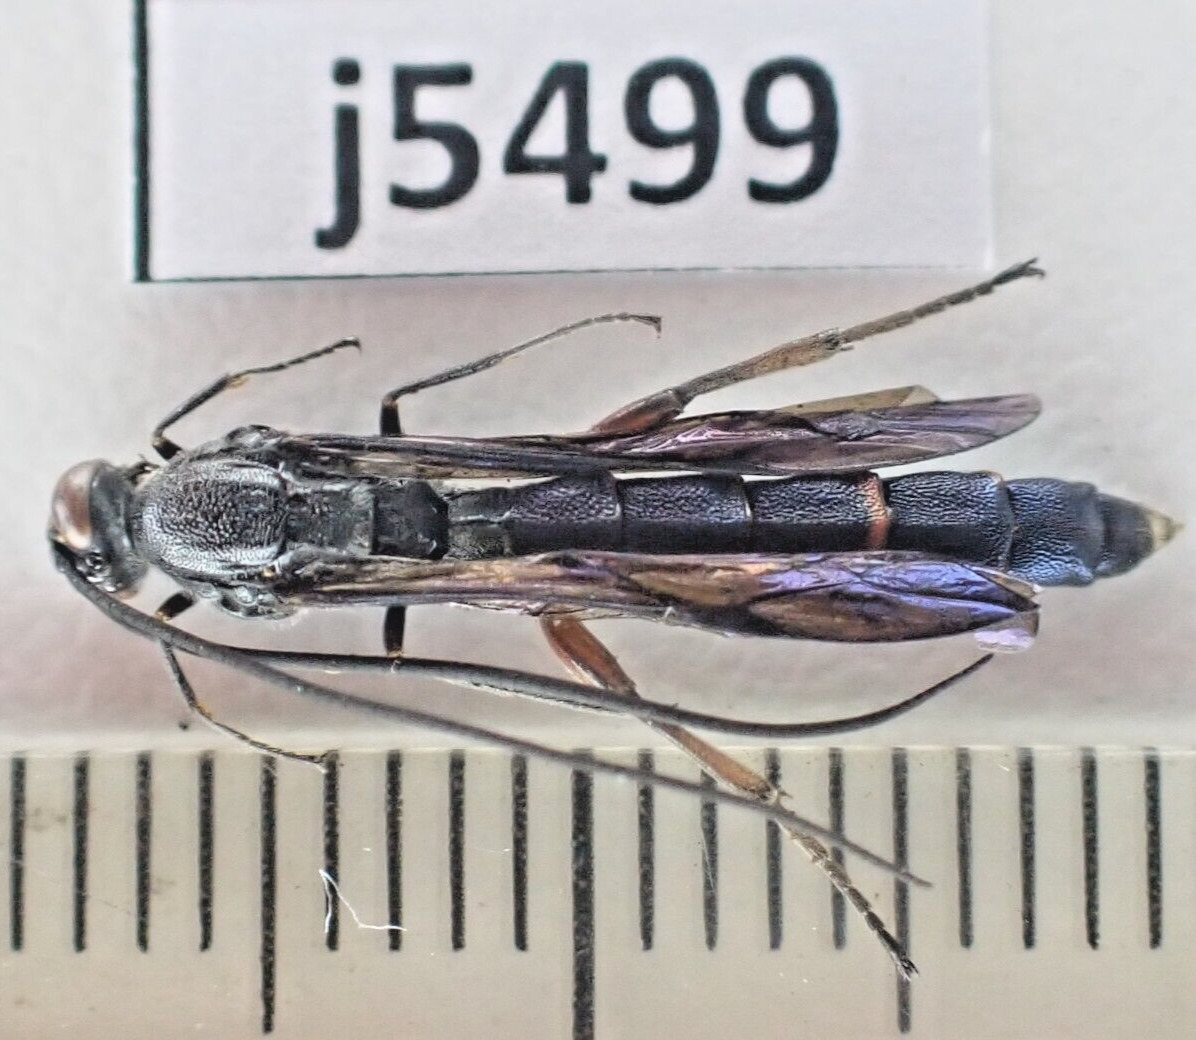 j5499. Insects, Hymenoptera sp. Vietnam, Lai Chau